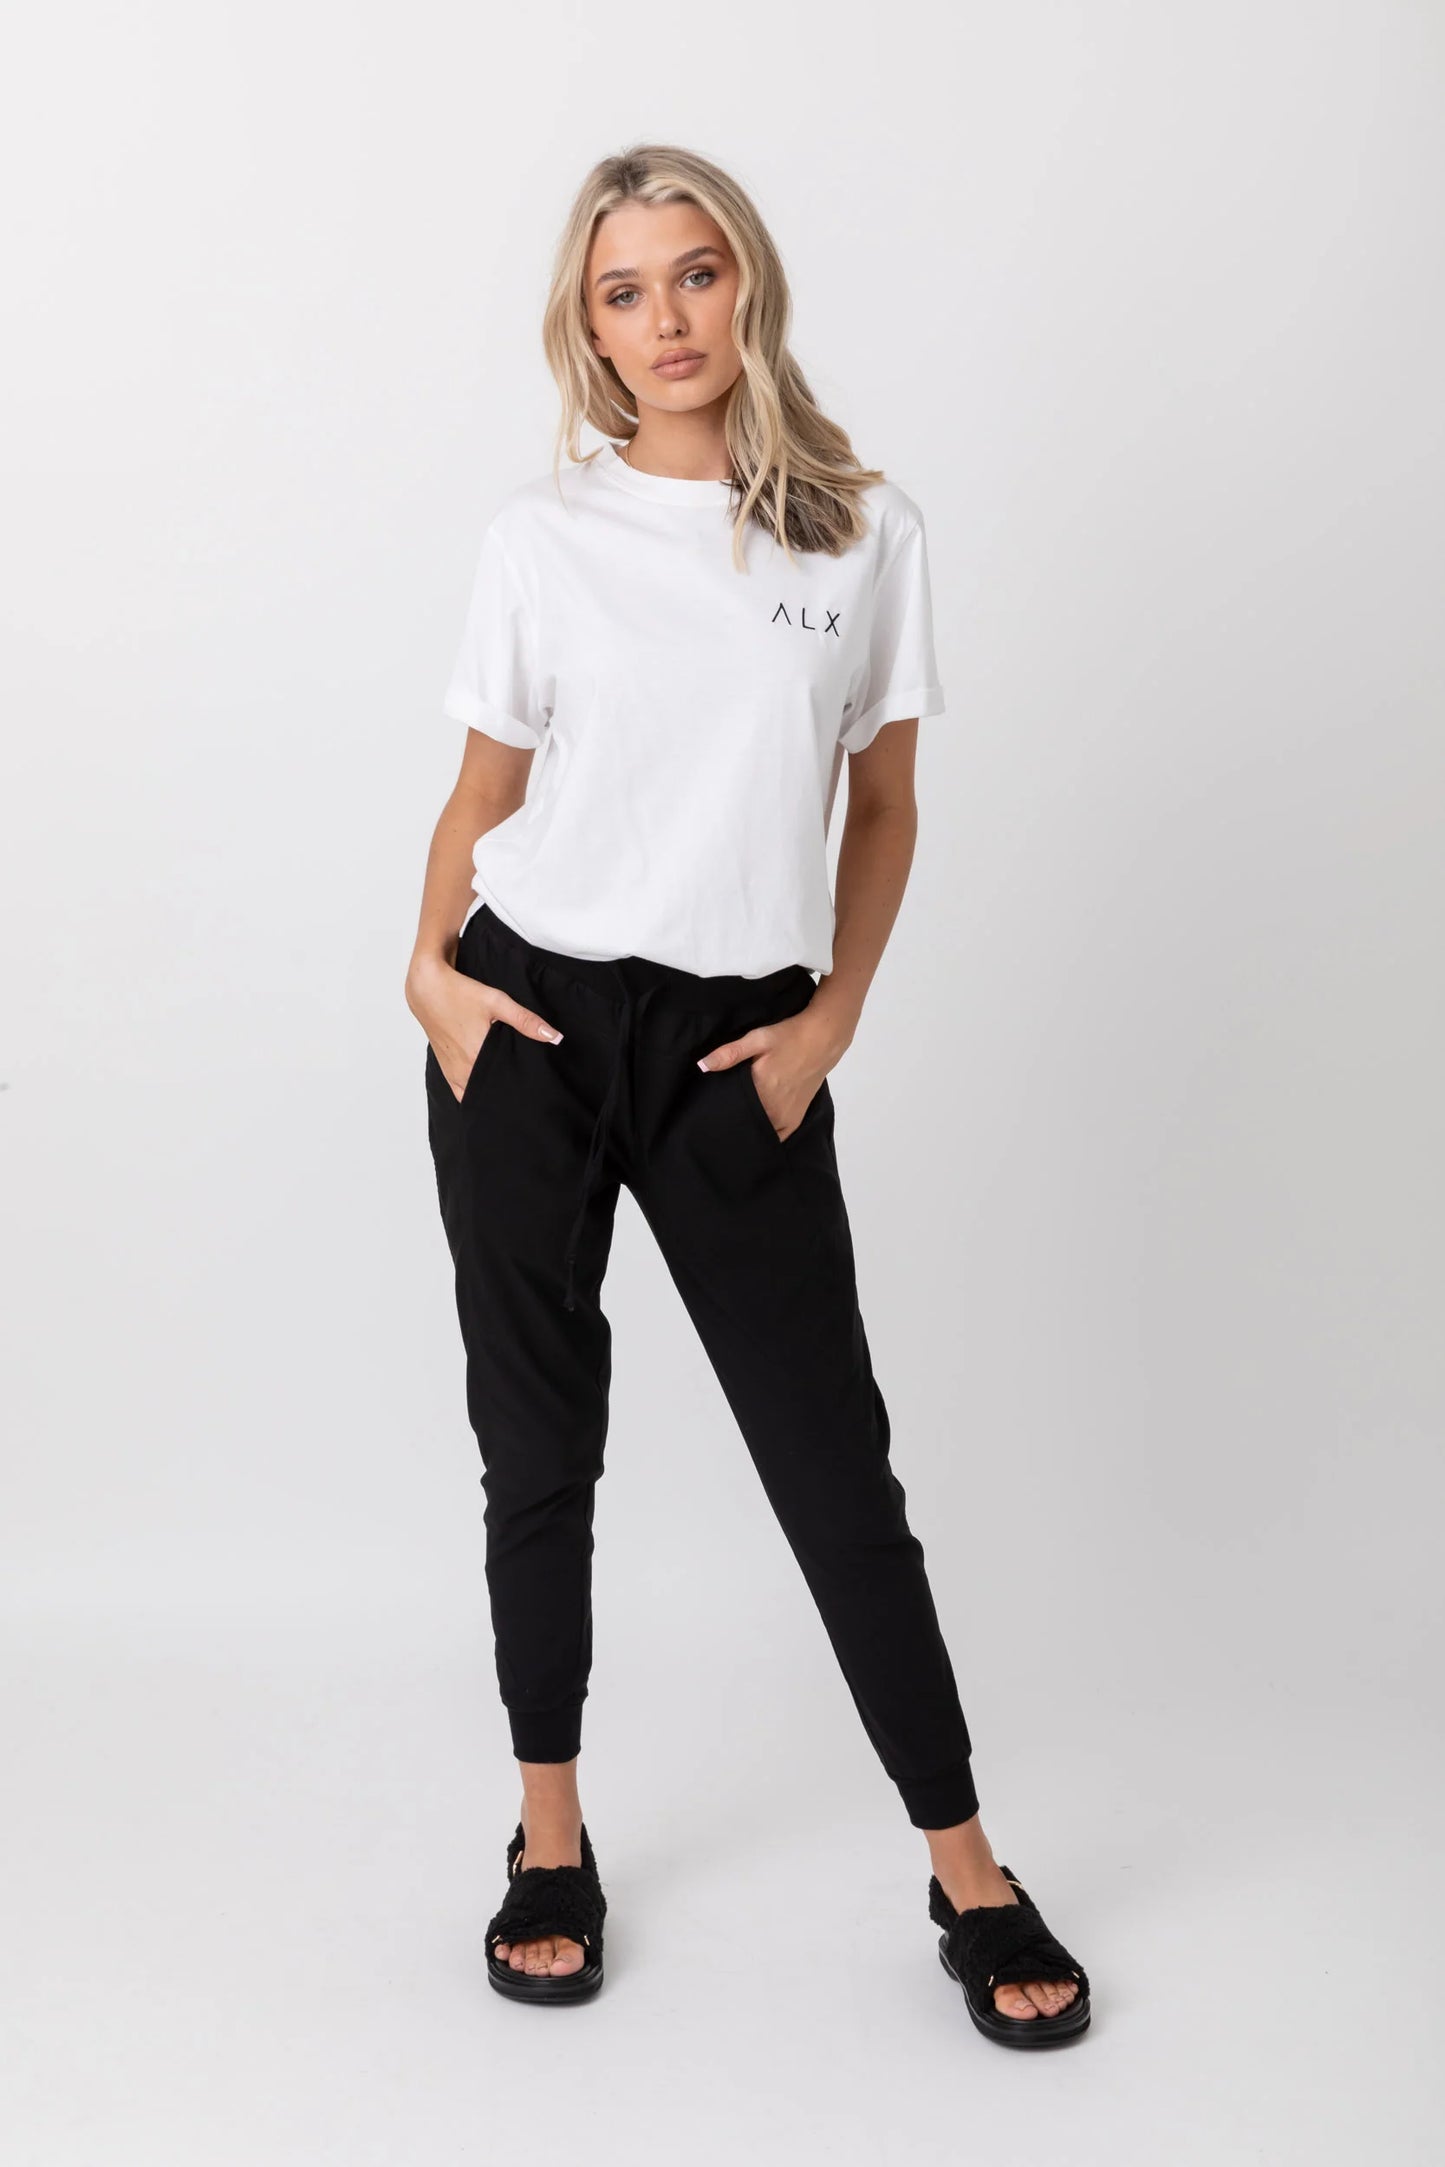 Alexandra ALX Crew T-Shirt White